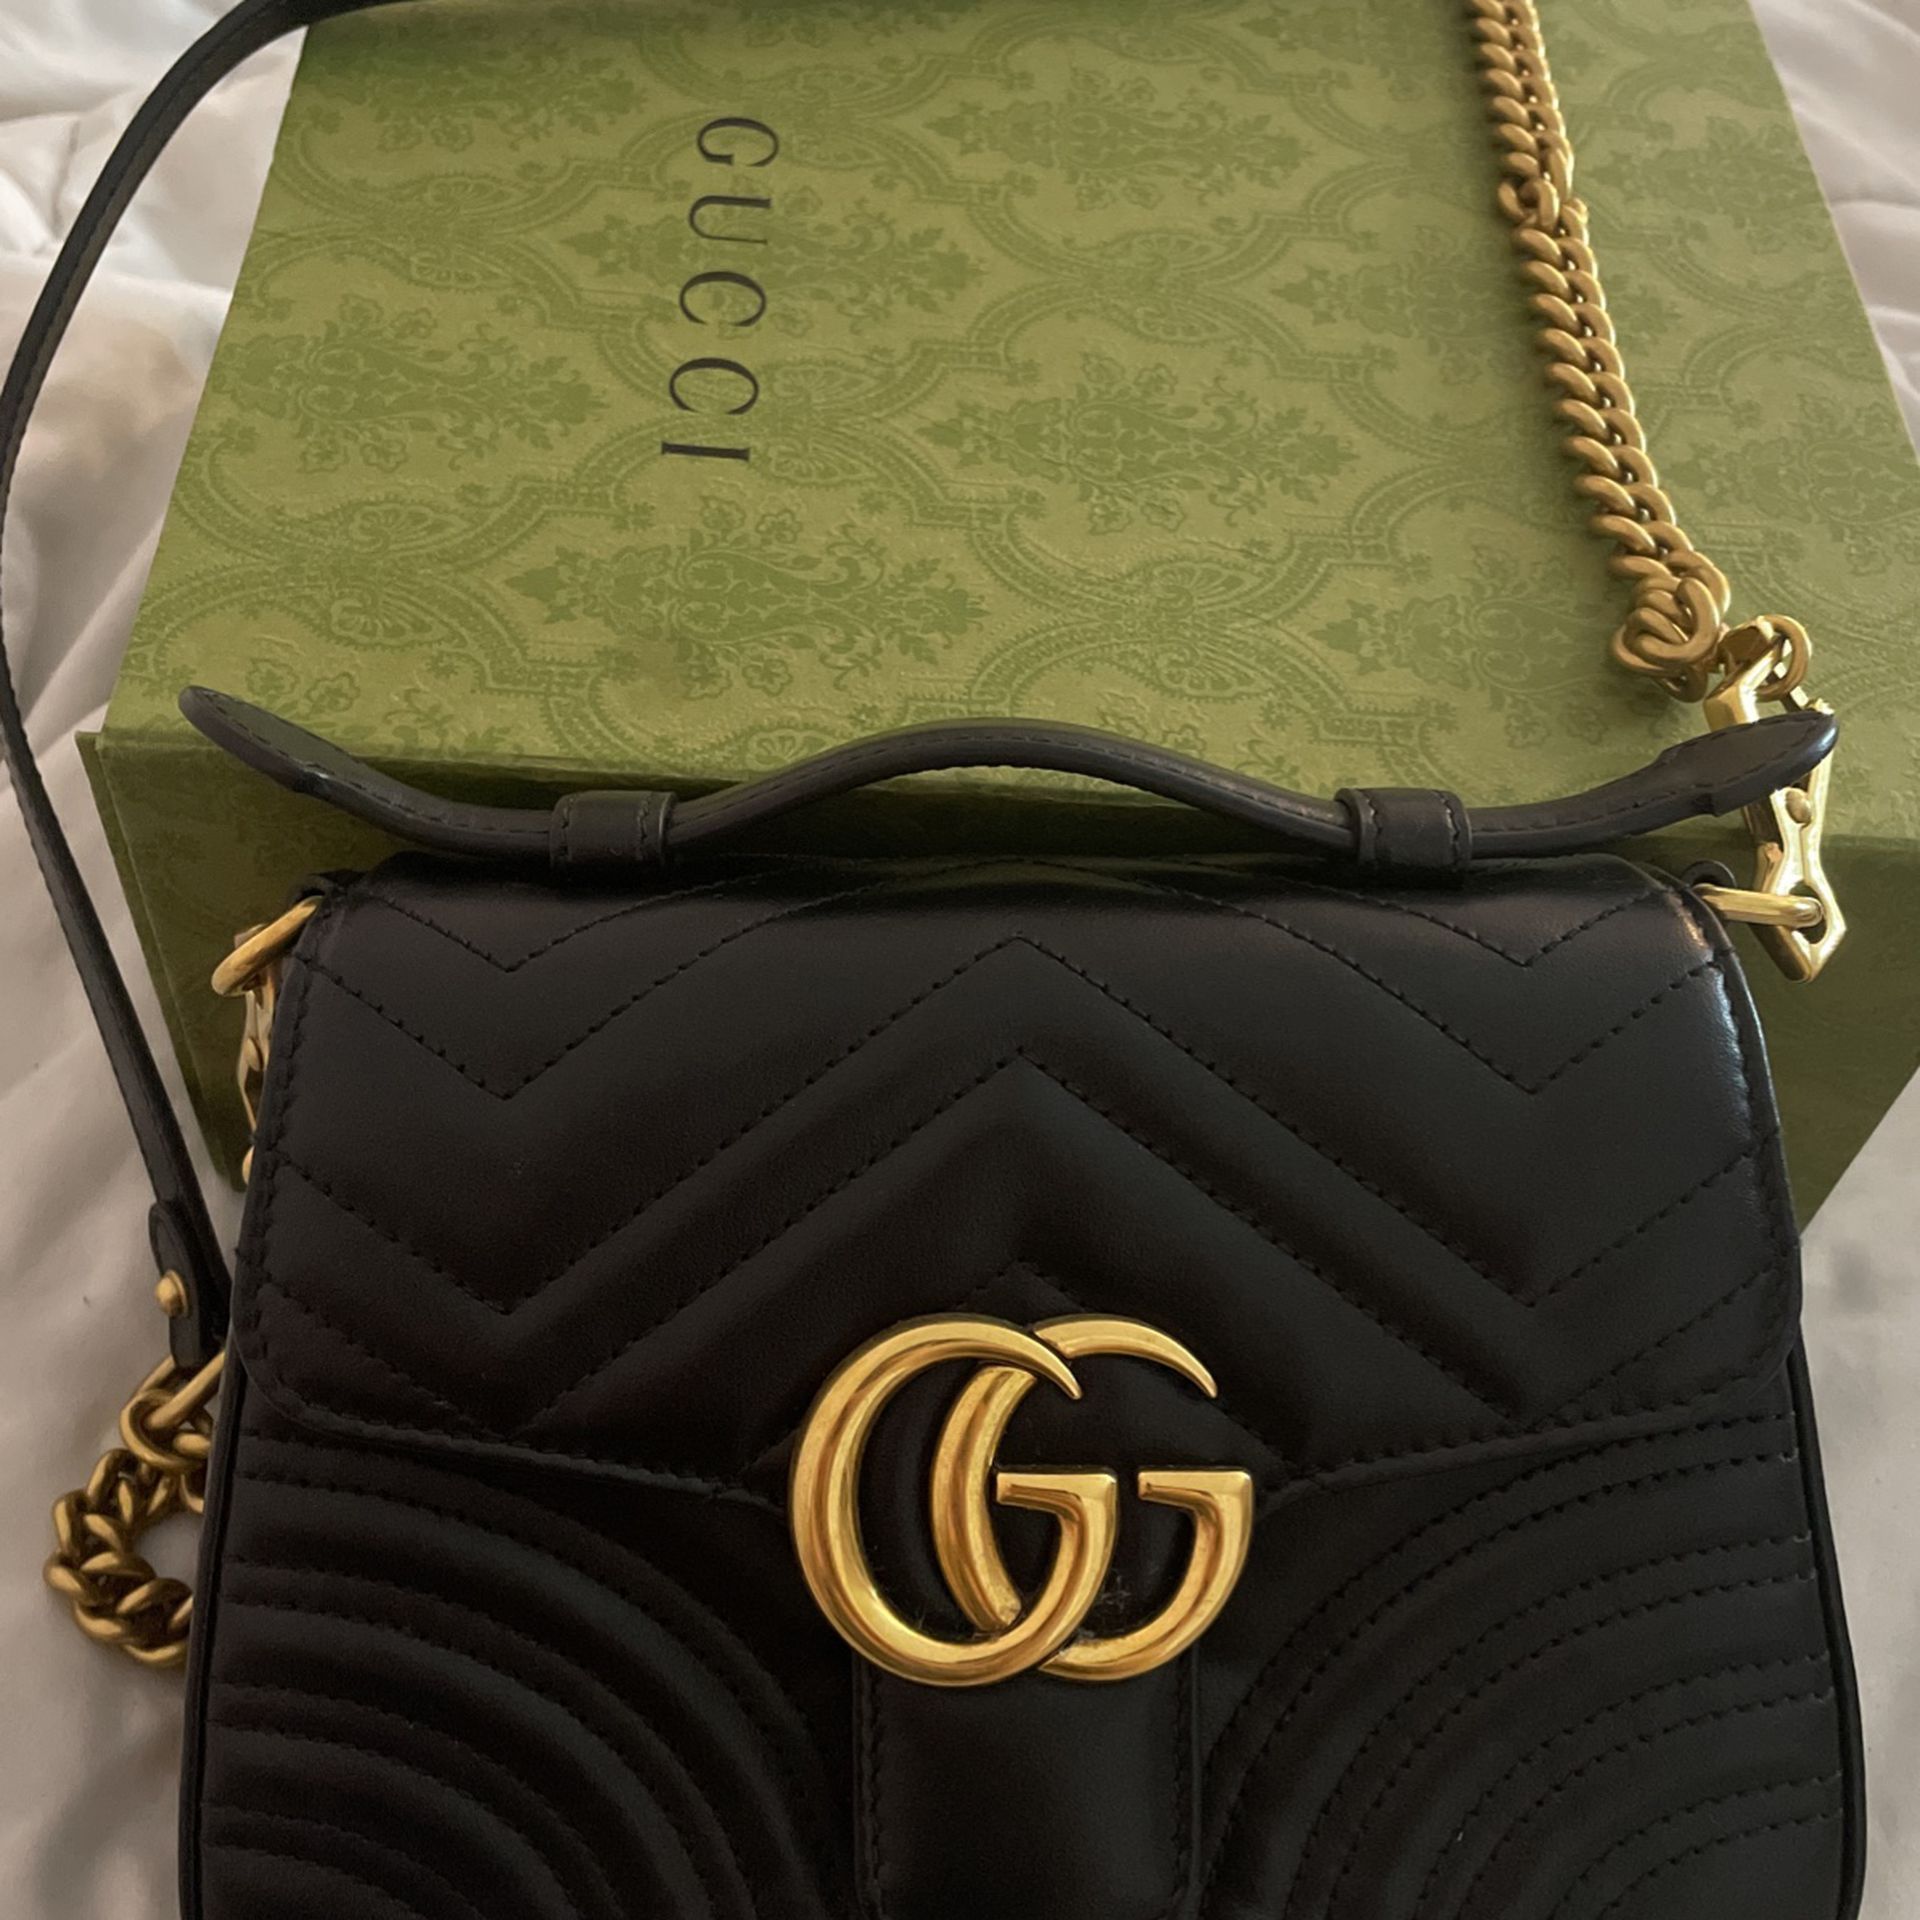 New In Box Gucci Handbag $1500 for Sale in Fullerton, CA - OfferUp